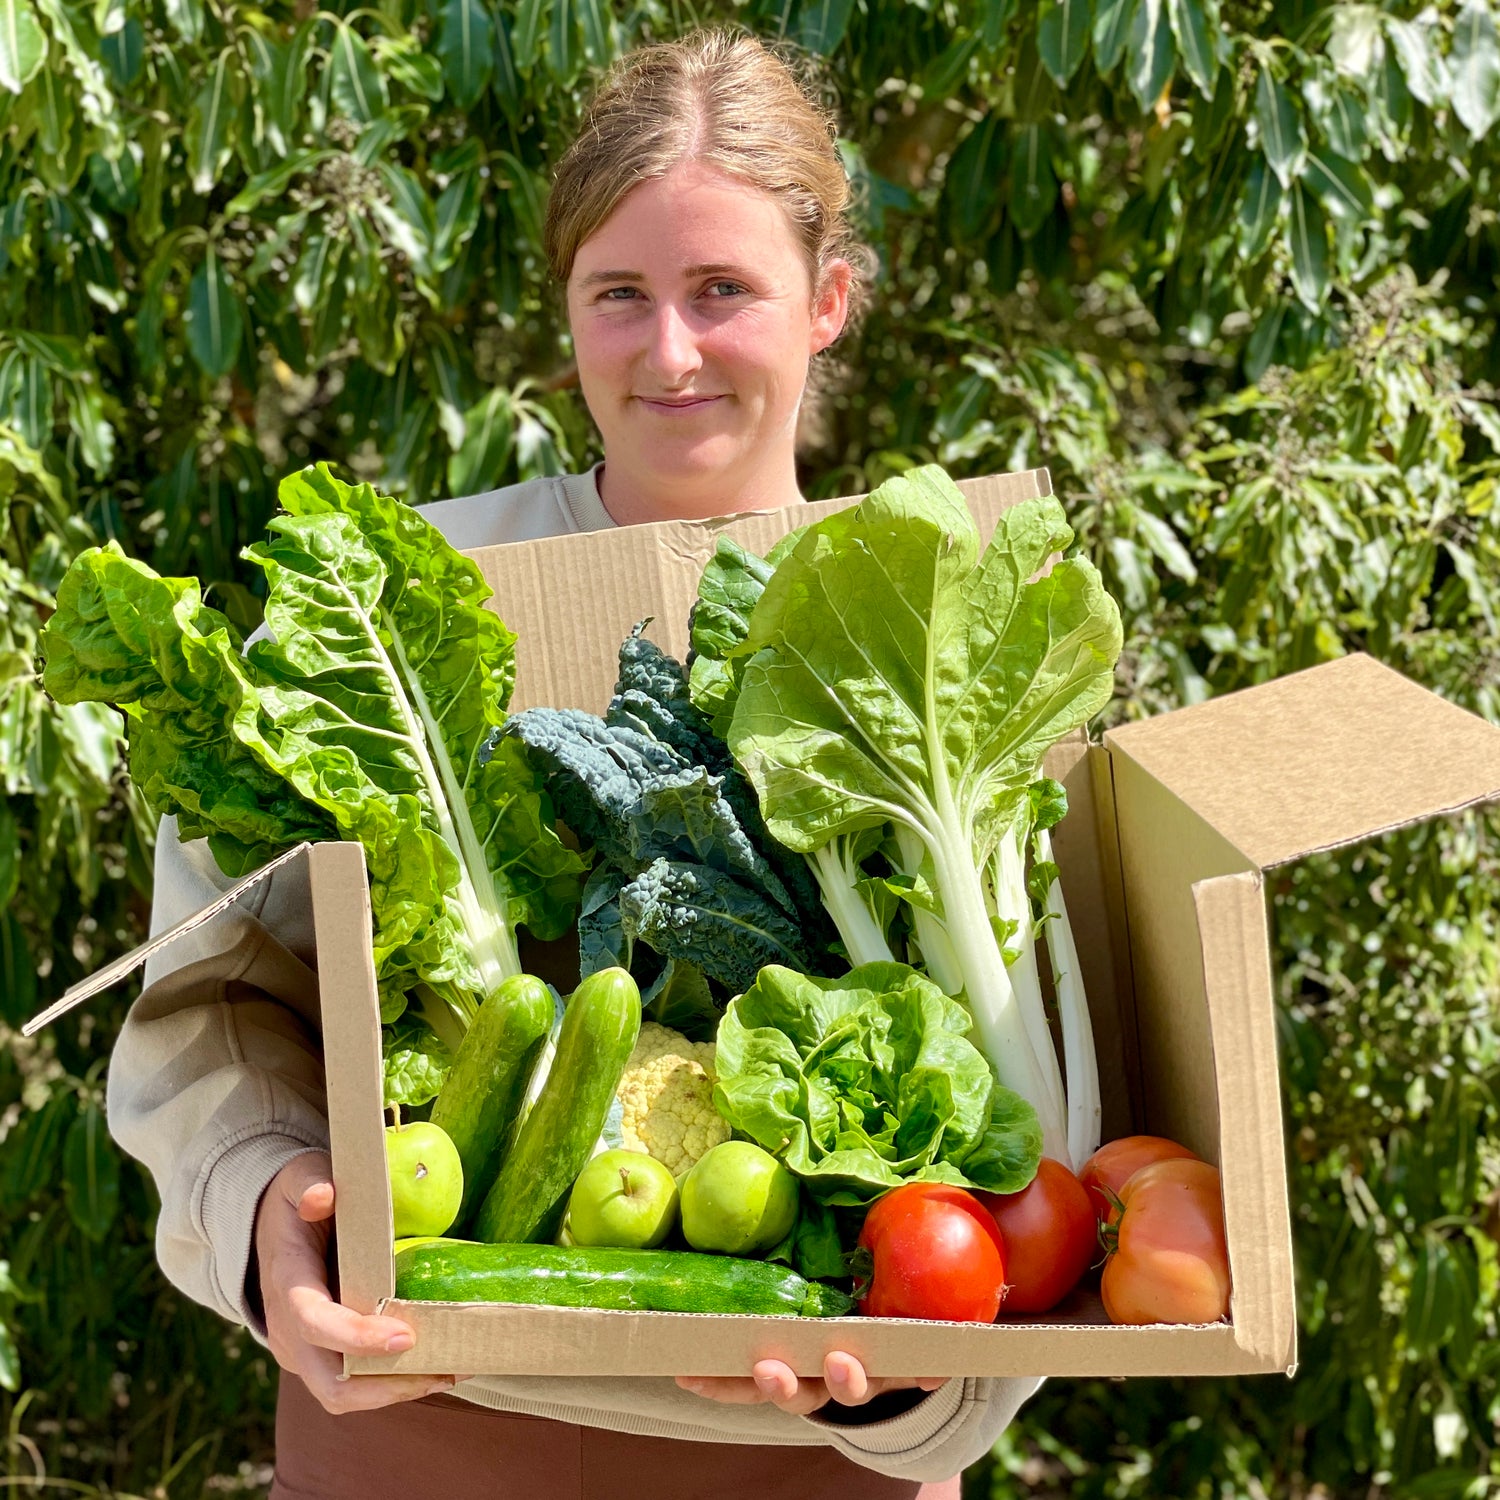 organic vegetables / little farms